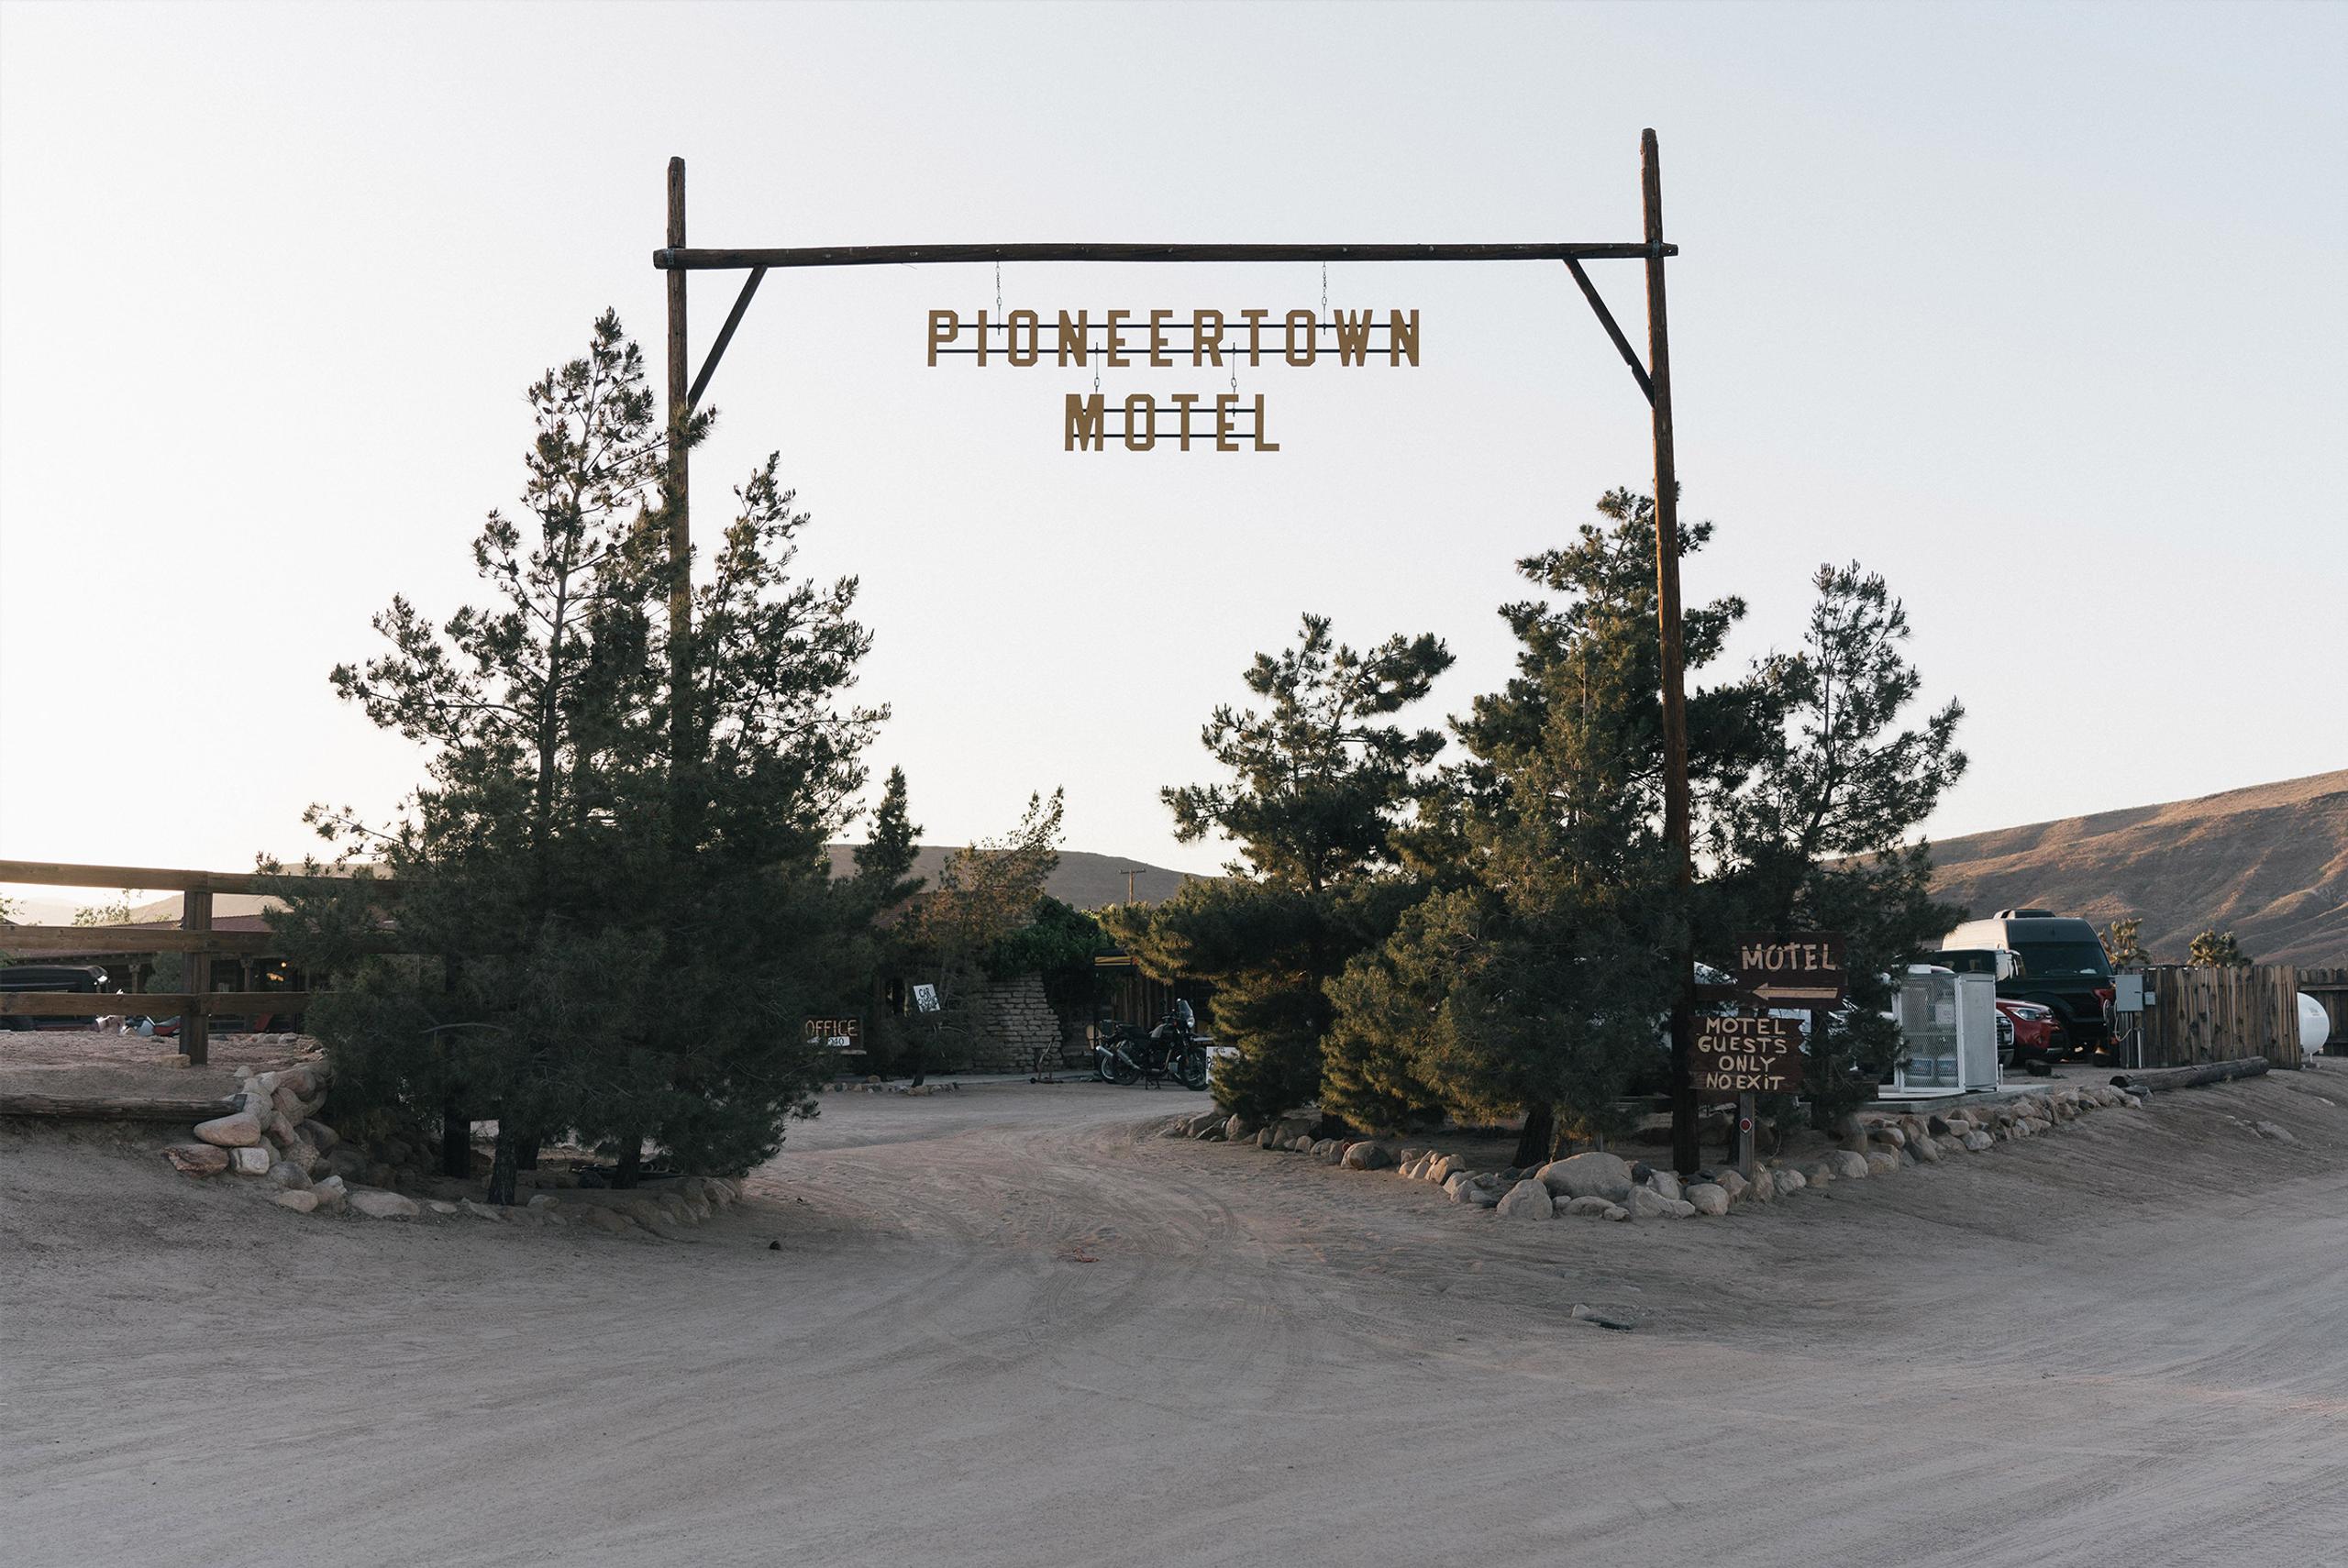 pioneertown motel sign